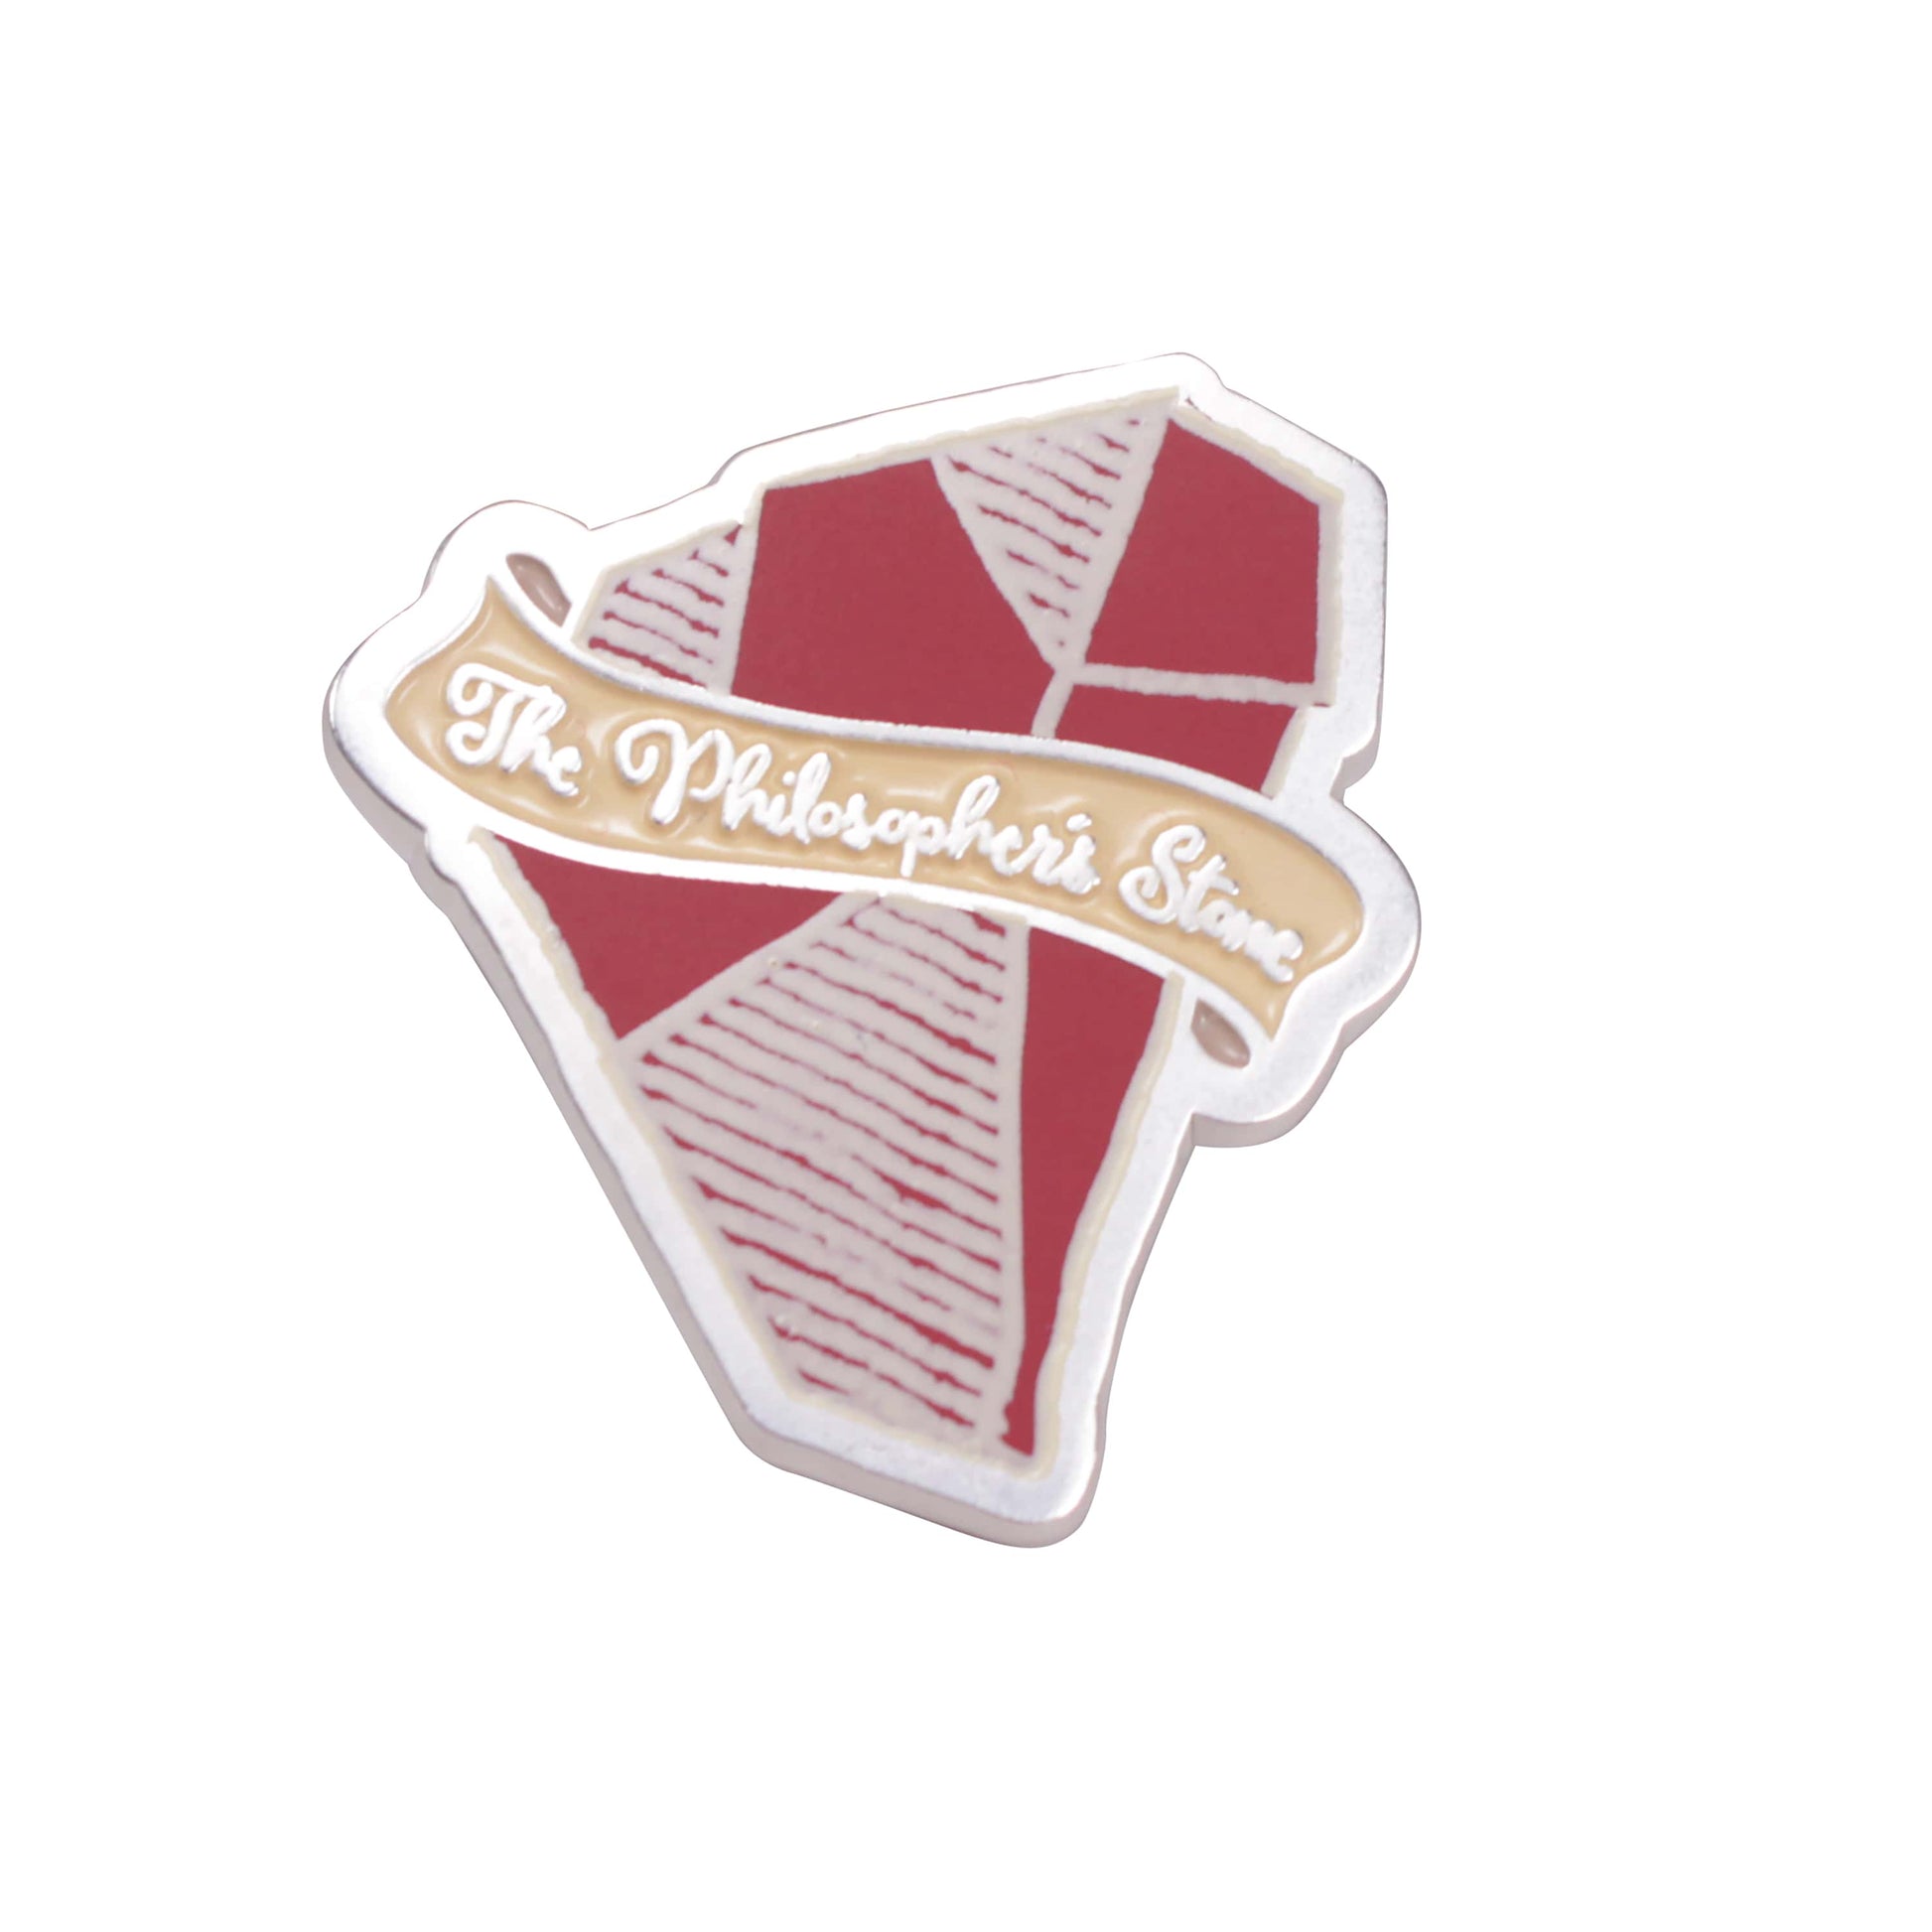 Philosopher's Stone Pin Badge - Harry Potter Gifts & MErchandise